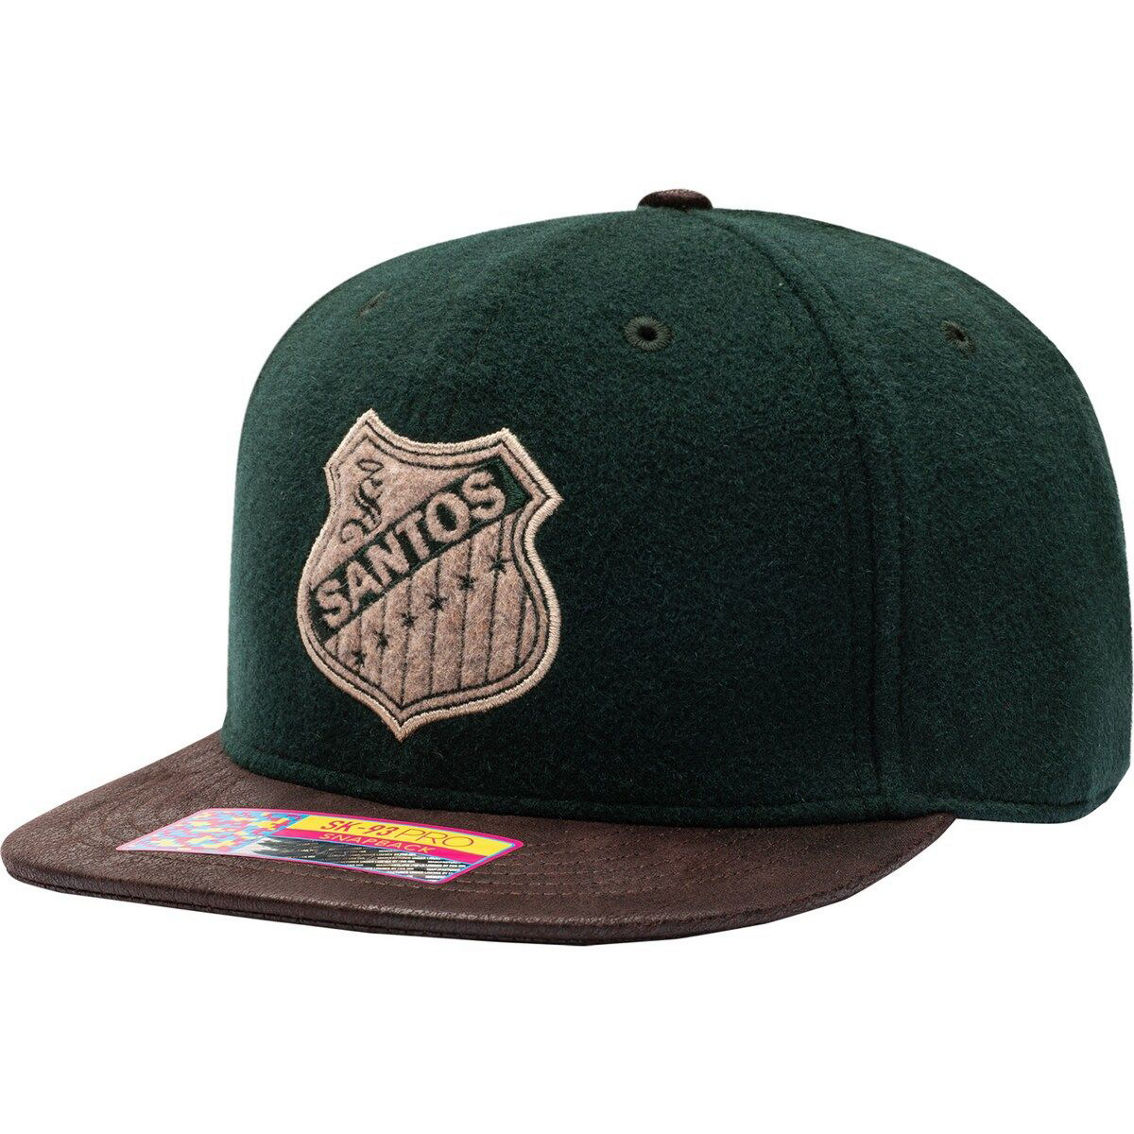 Fan Ink Men's Green/Brown Santos Laguna Prep Snapback Hat - Image 2 of 4